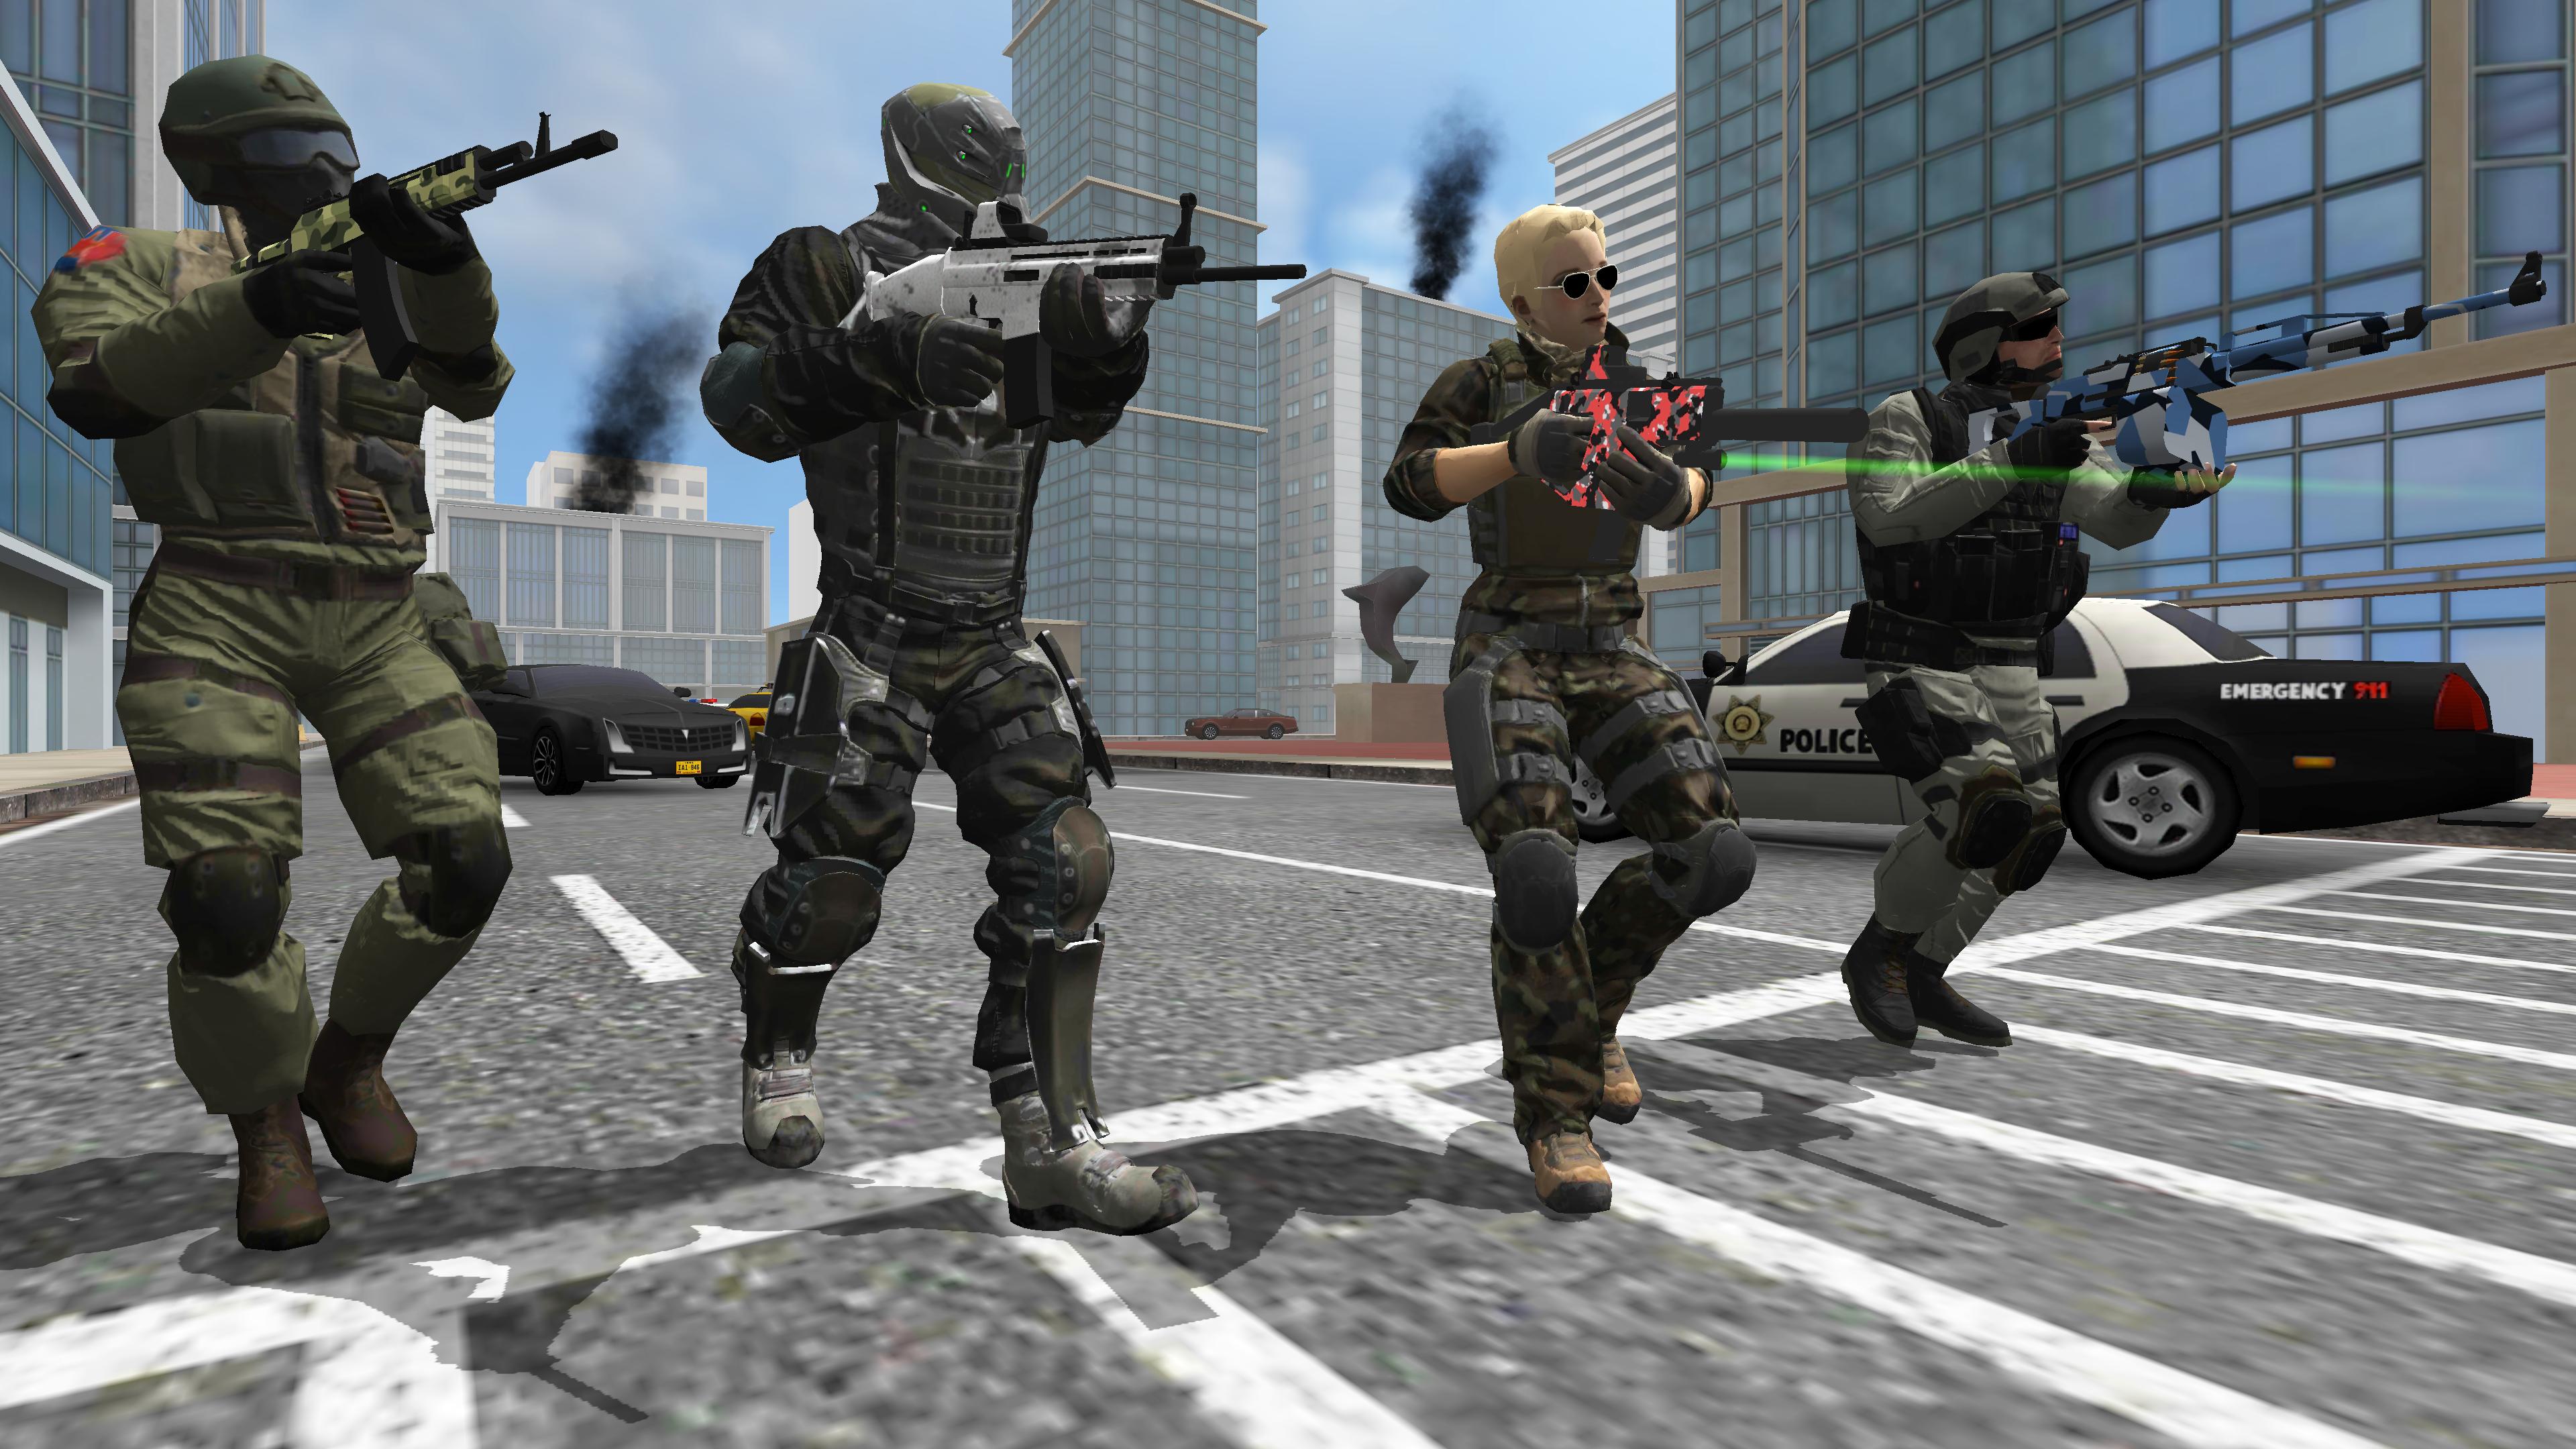 Earth Protect Squad Third Person Shooting Game 2.00.32b Screenshot 7